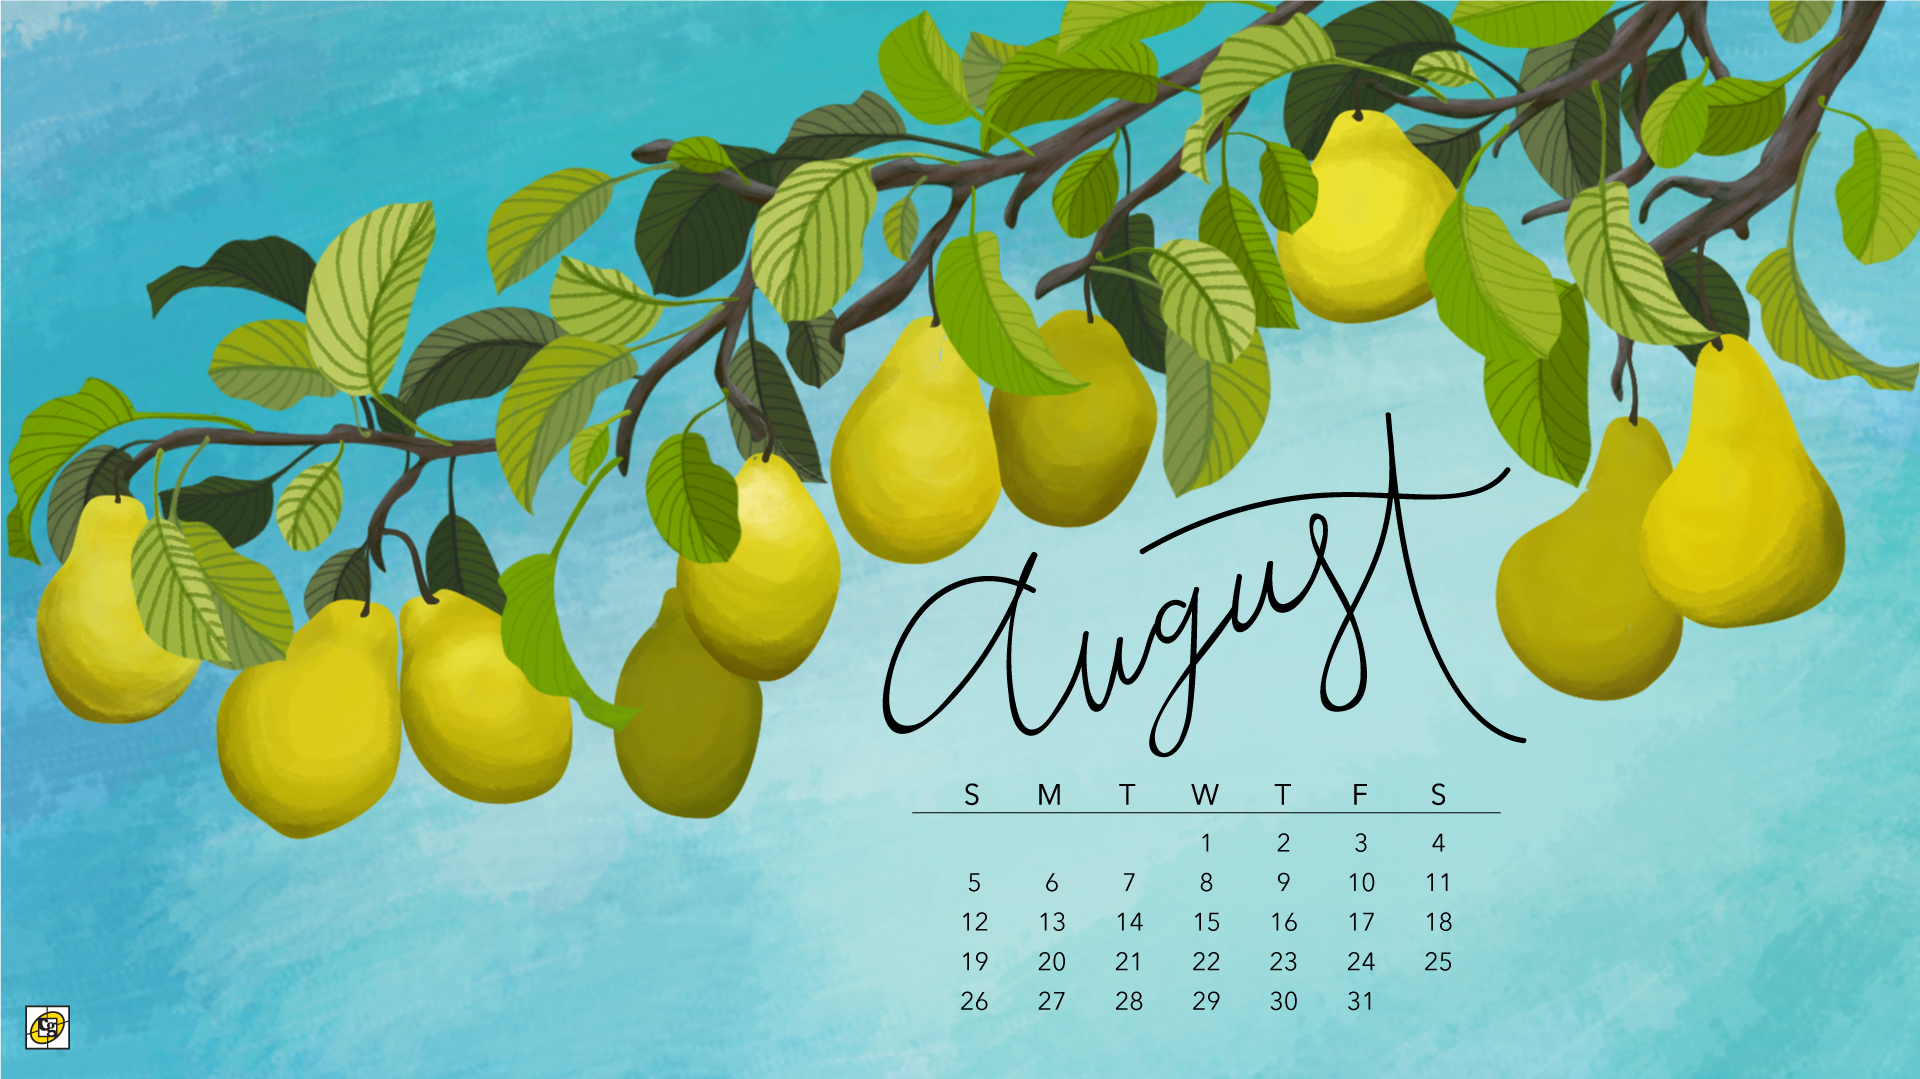 august-2018-calendar-with-usa-holidays-oppidan-library